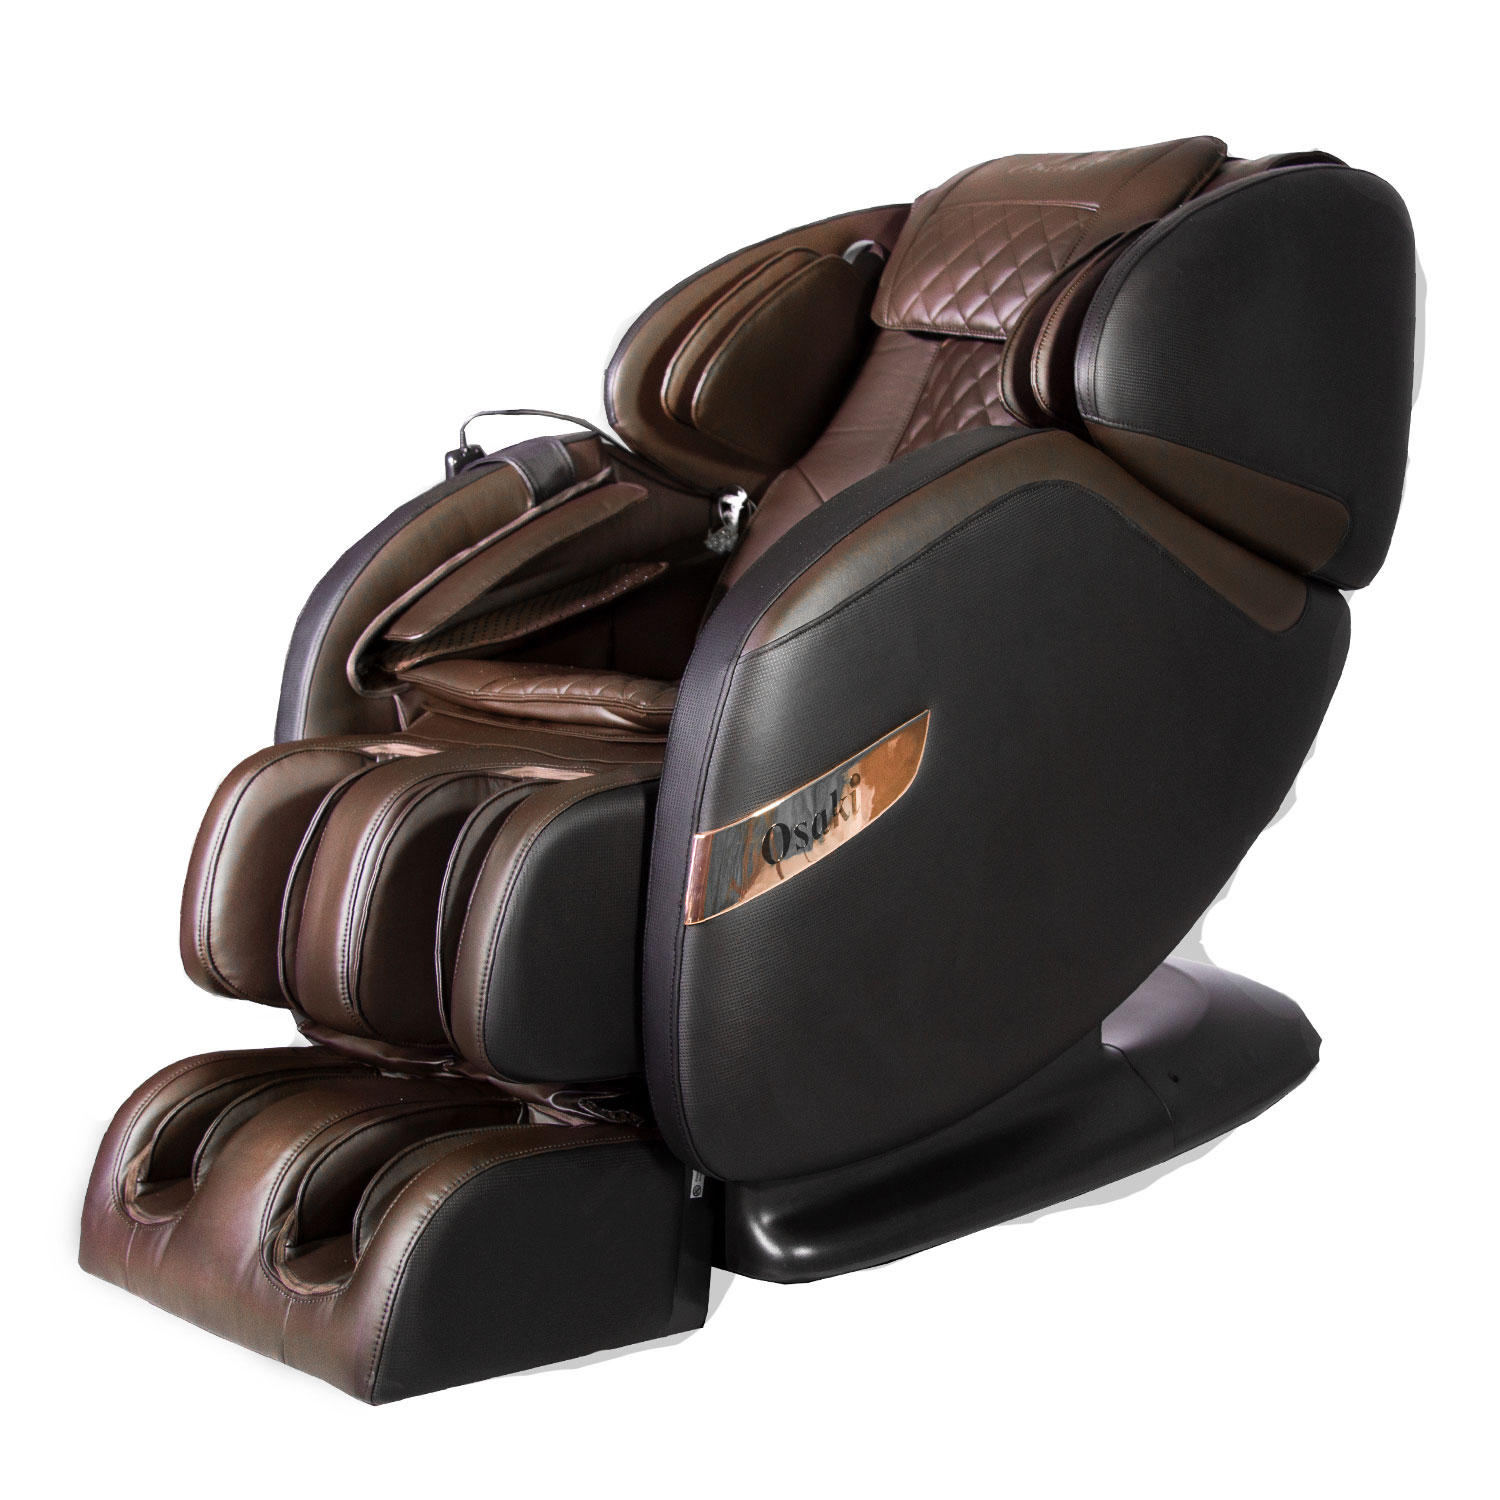 OS-Champ Zero Gravity Massage Chair